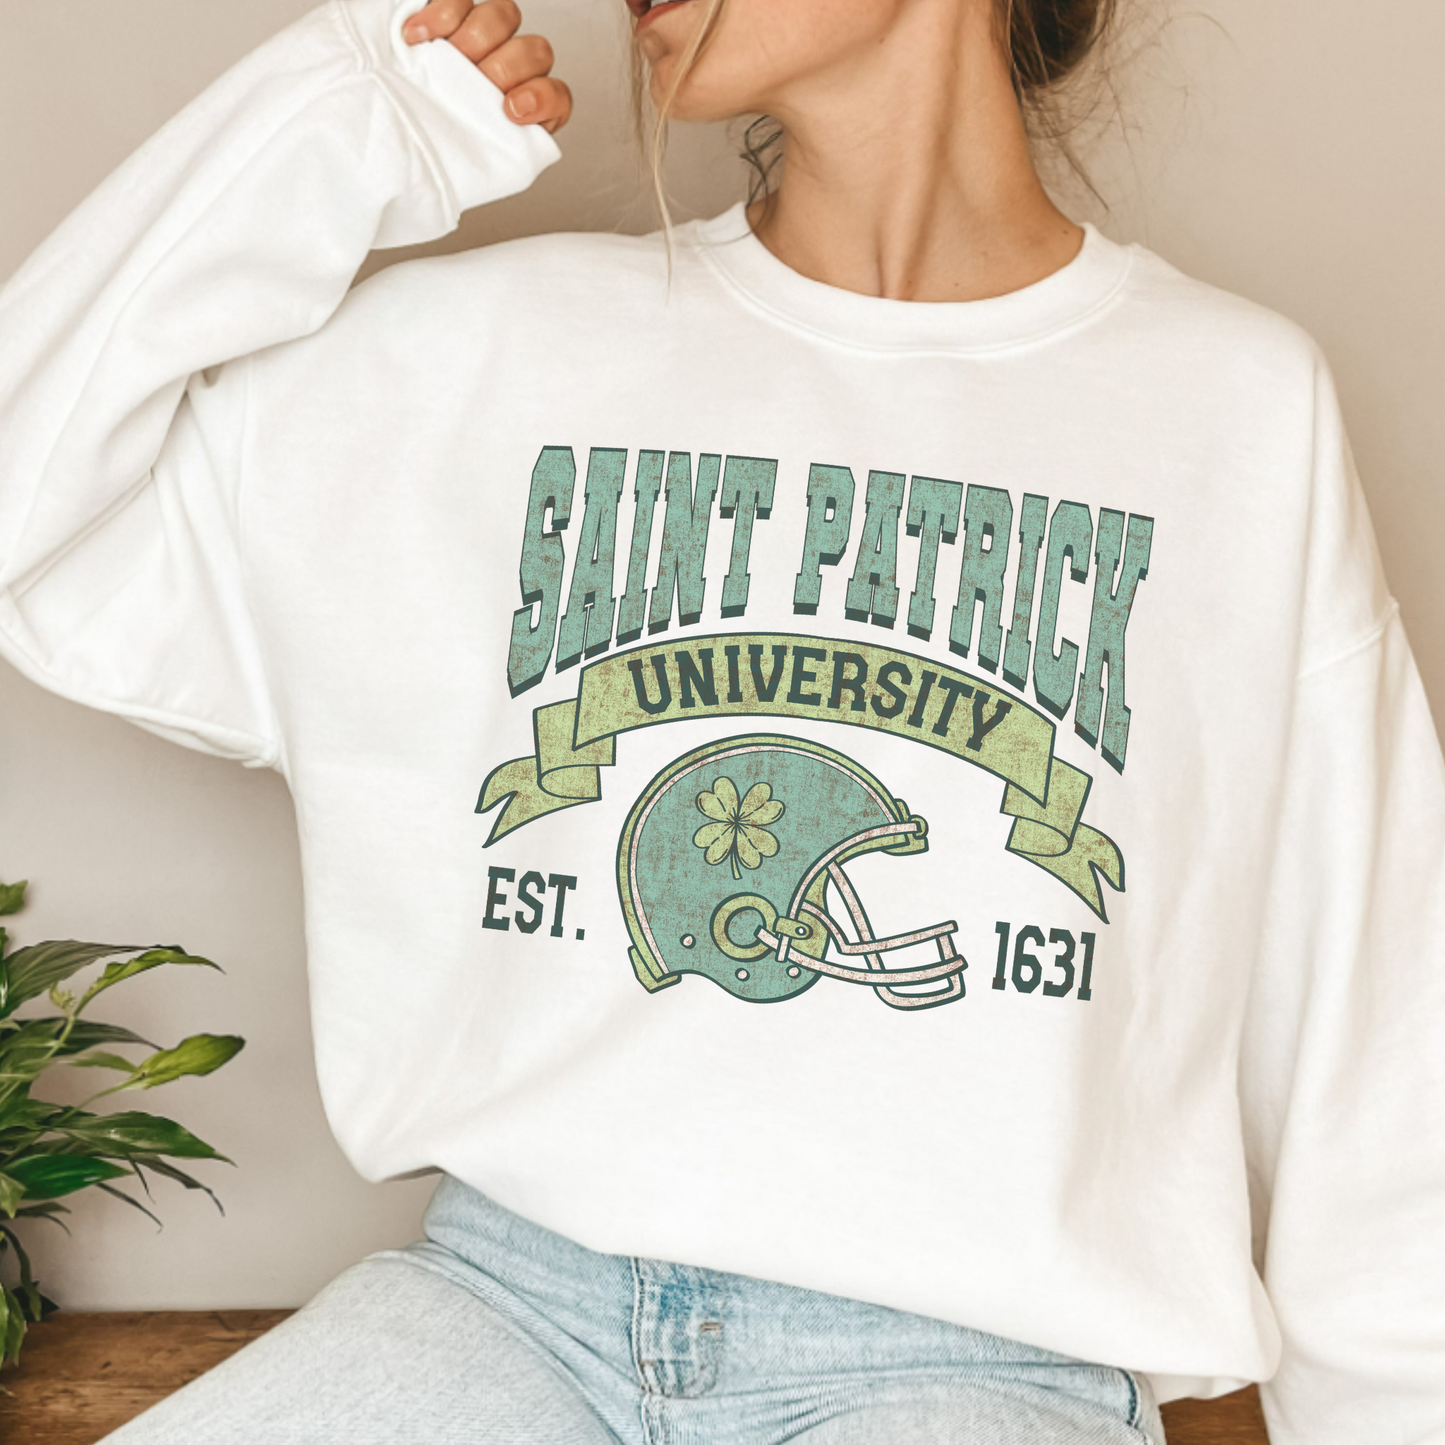 (Shirt not Included) Saint Patrick University - Clear Film Transfer